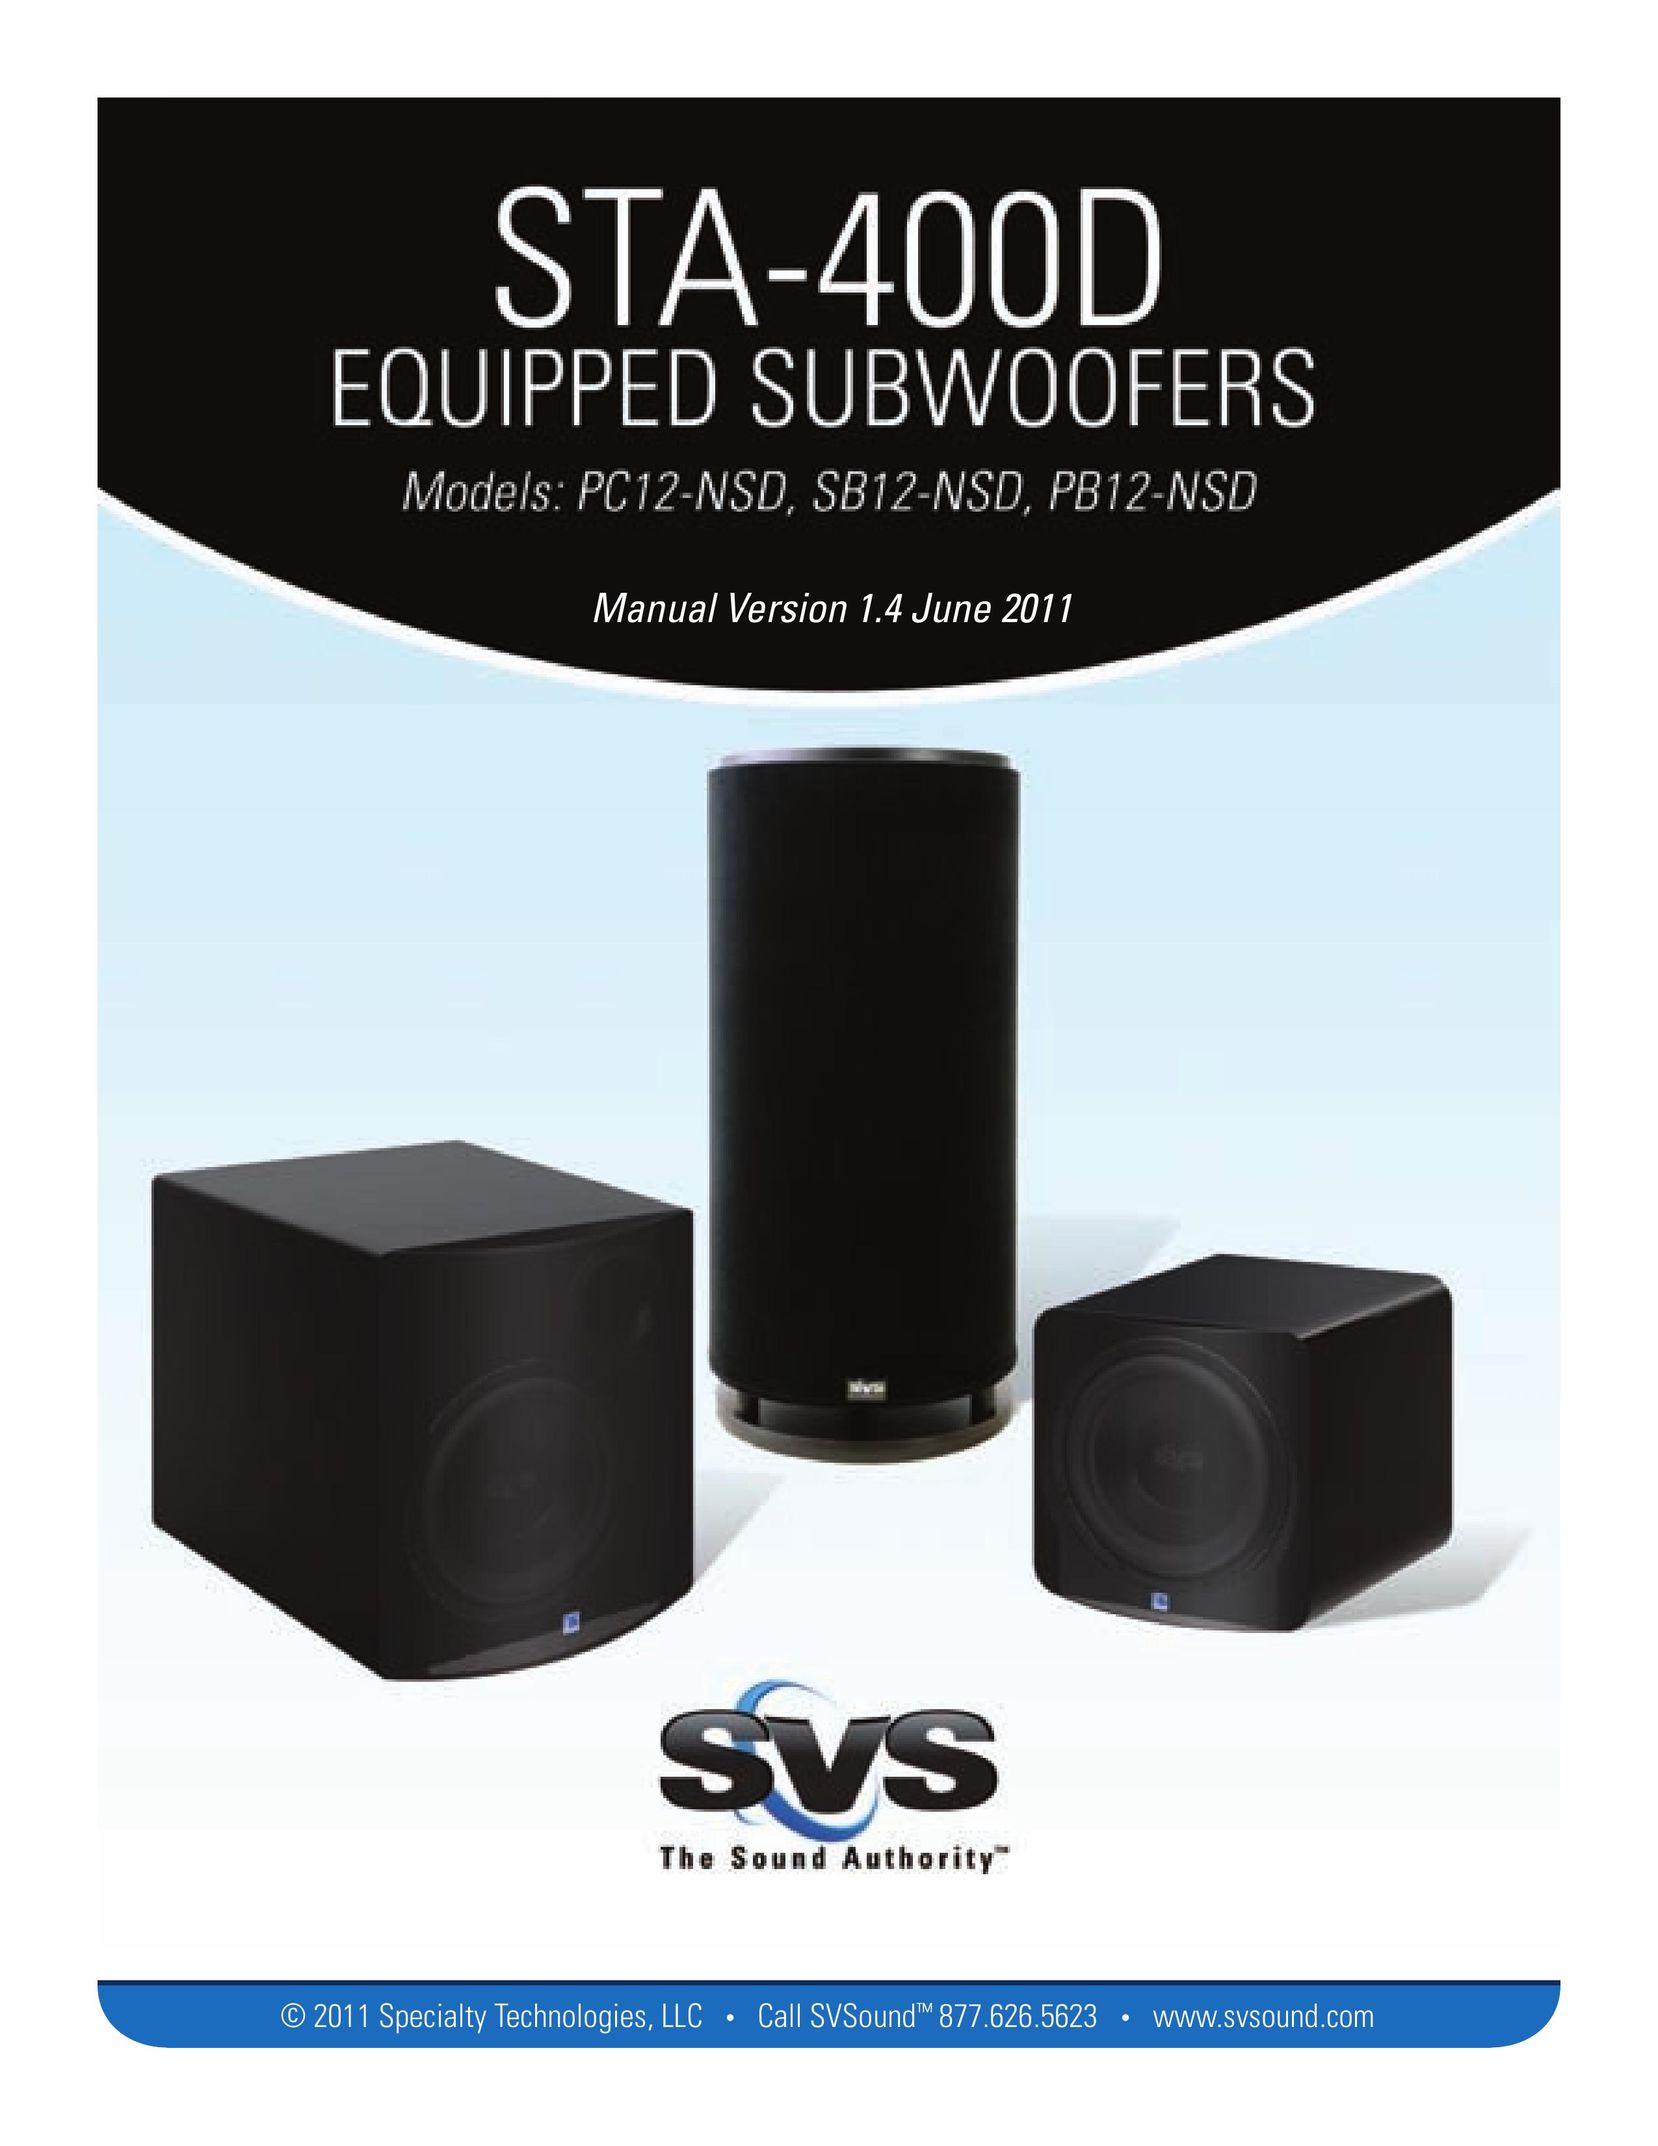 SV Sound SB12-NSD Car Speaker User Manual